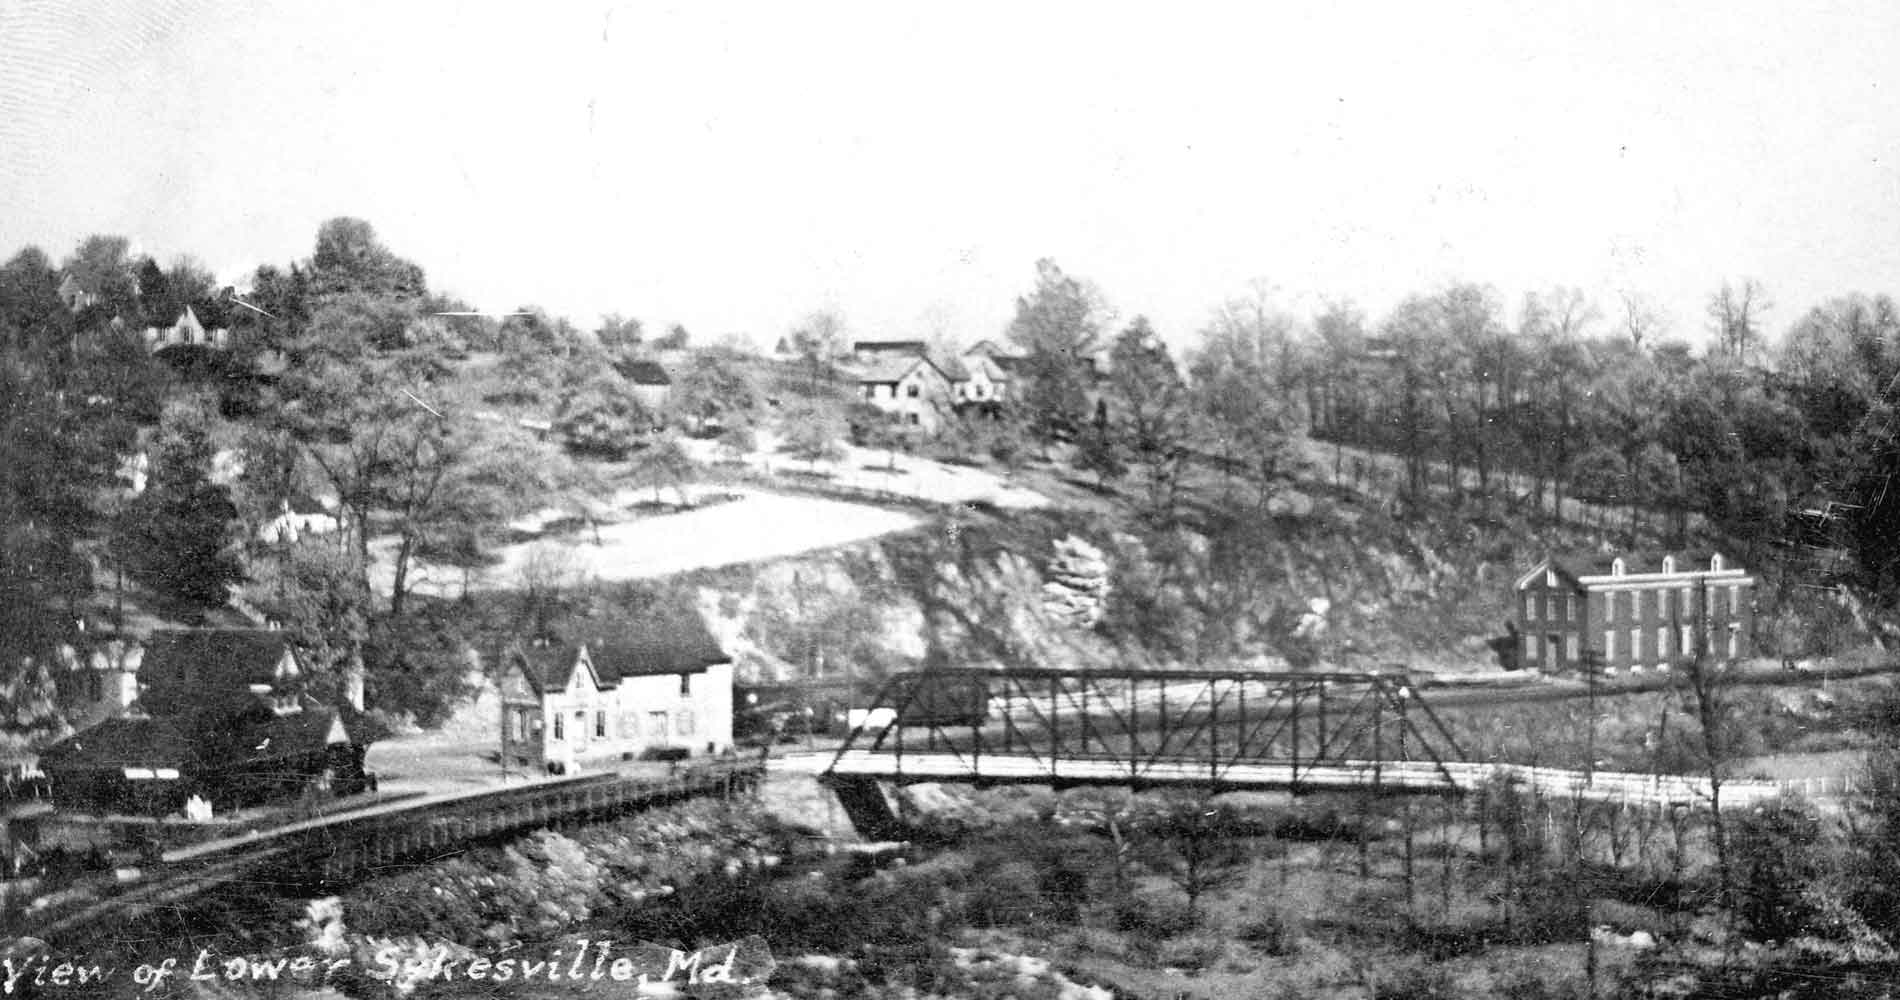 Sykesville bridge